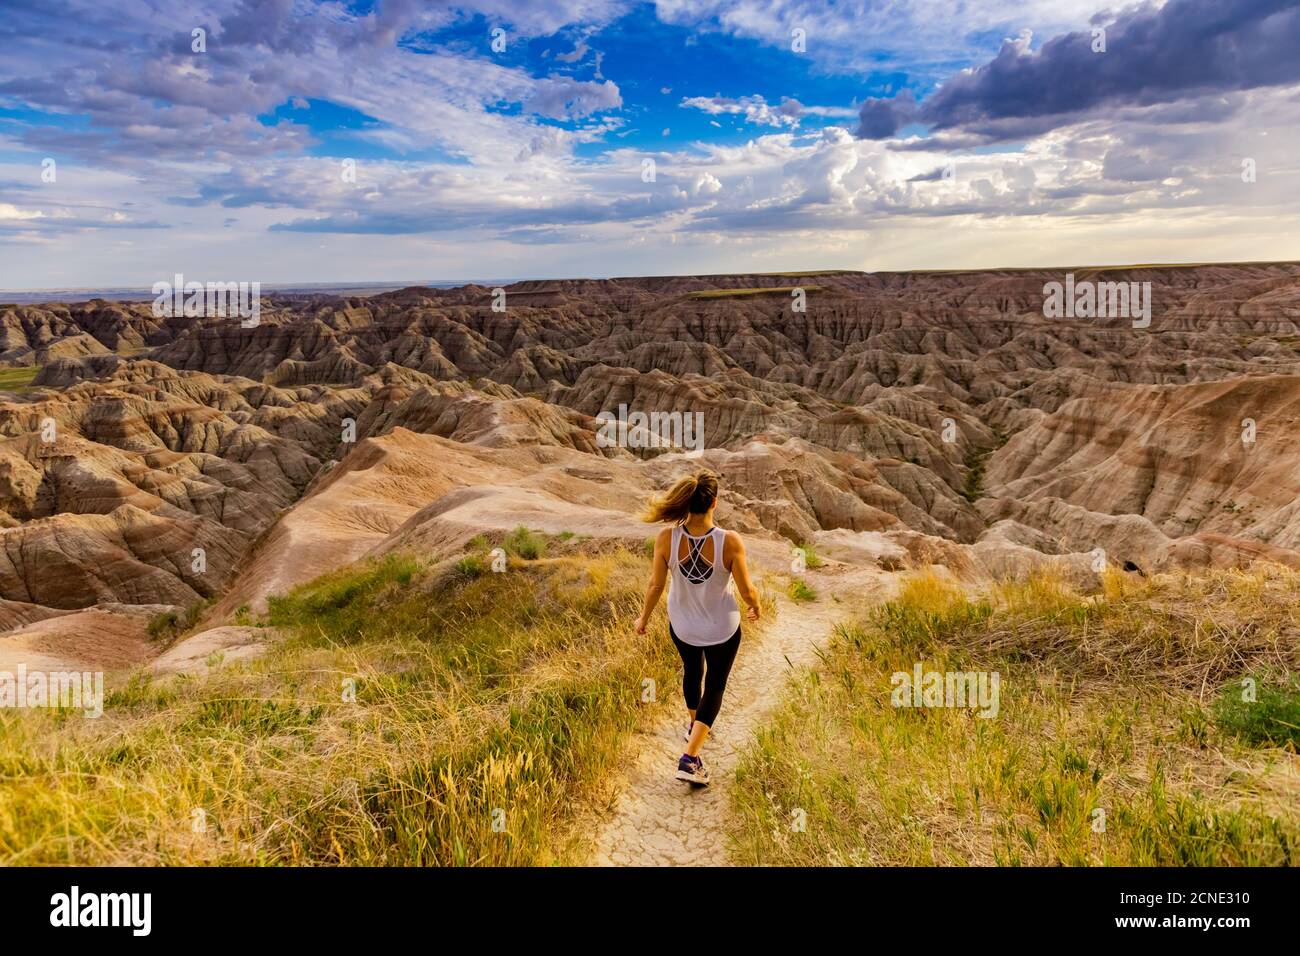 Woman hiking her way through the scenic Badlands, South Dakota, United States of America Stock Photo